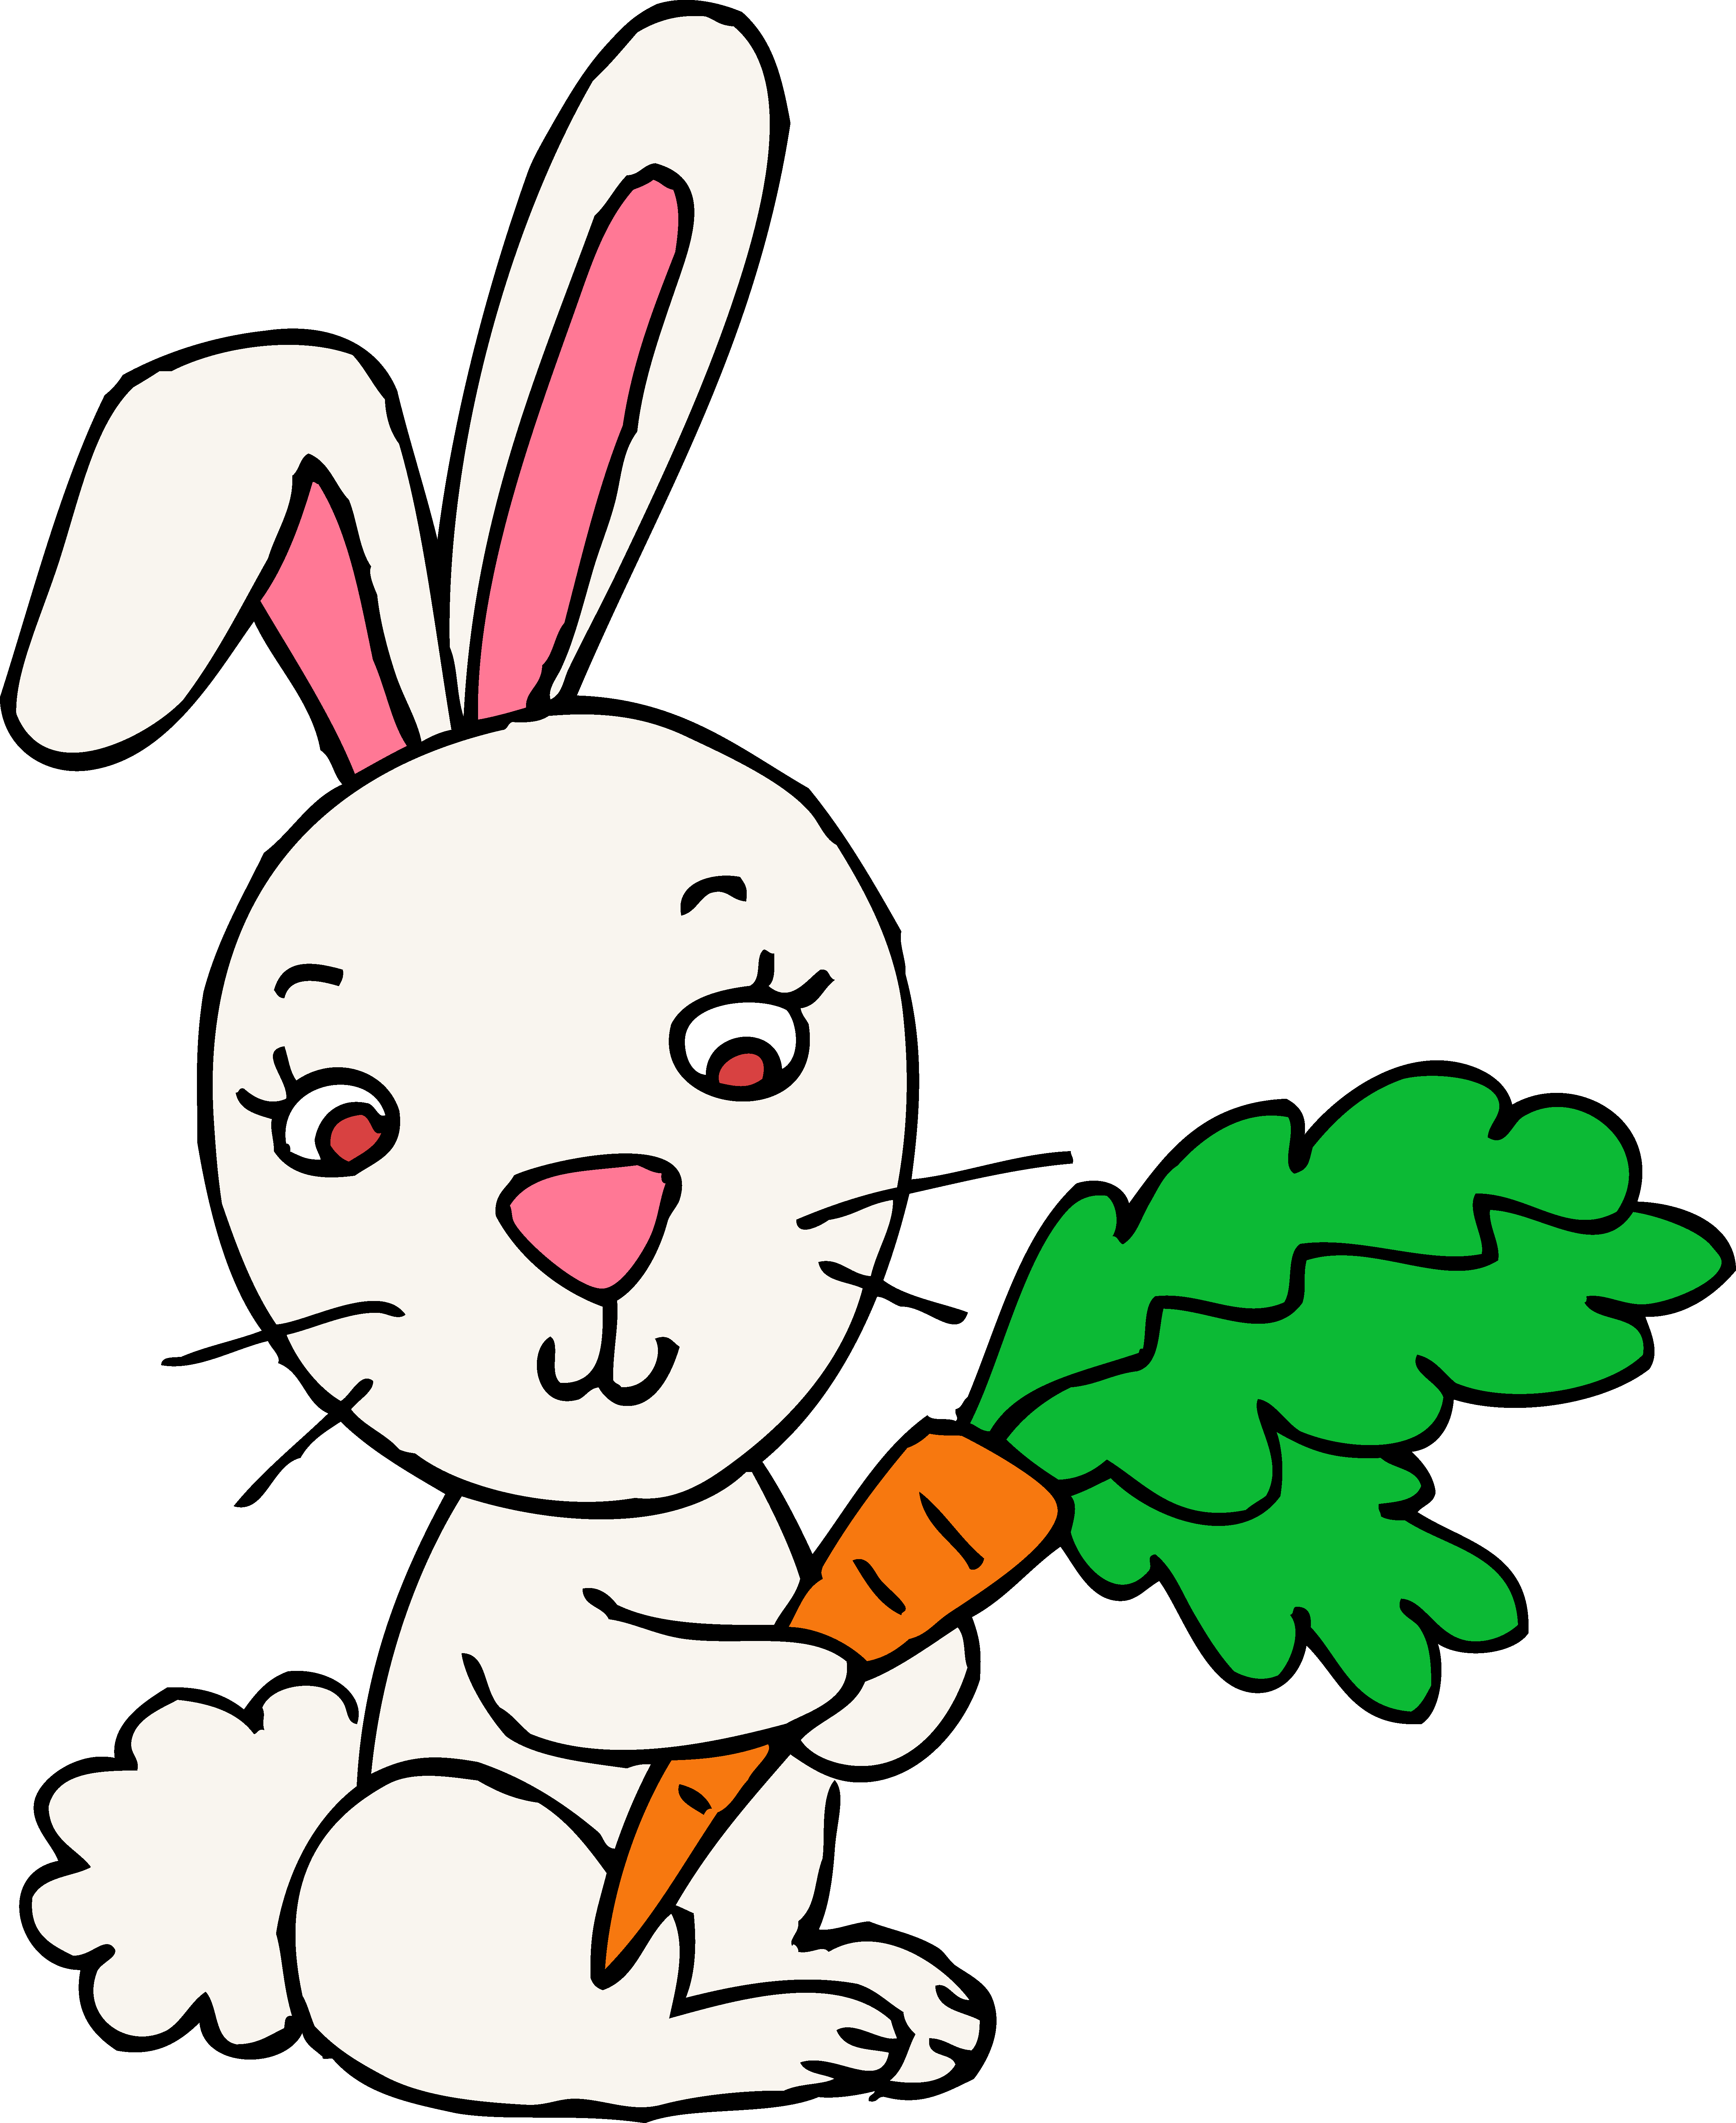 Funny easter bunny clipart - ClipartFox